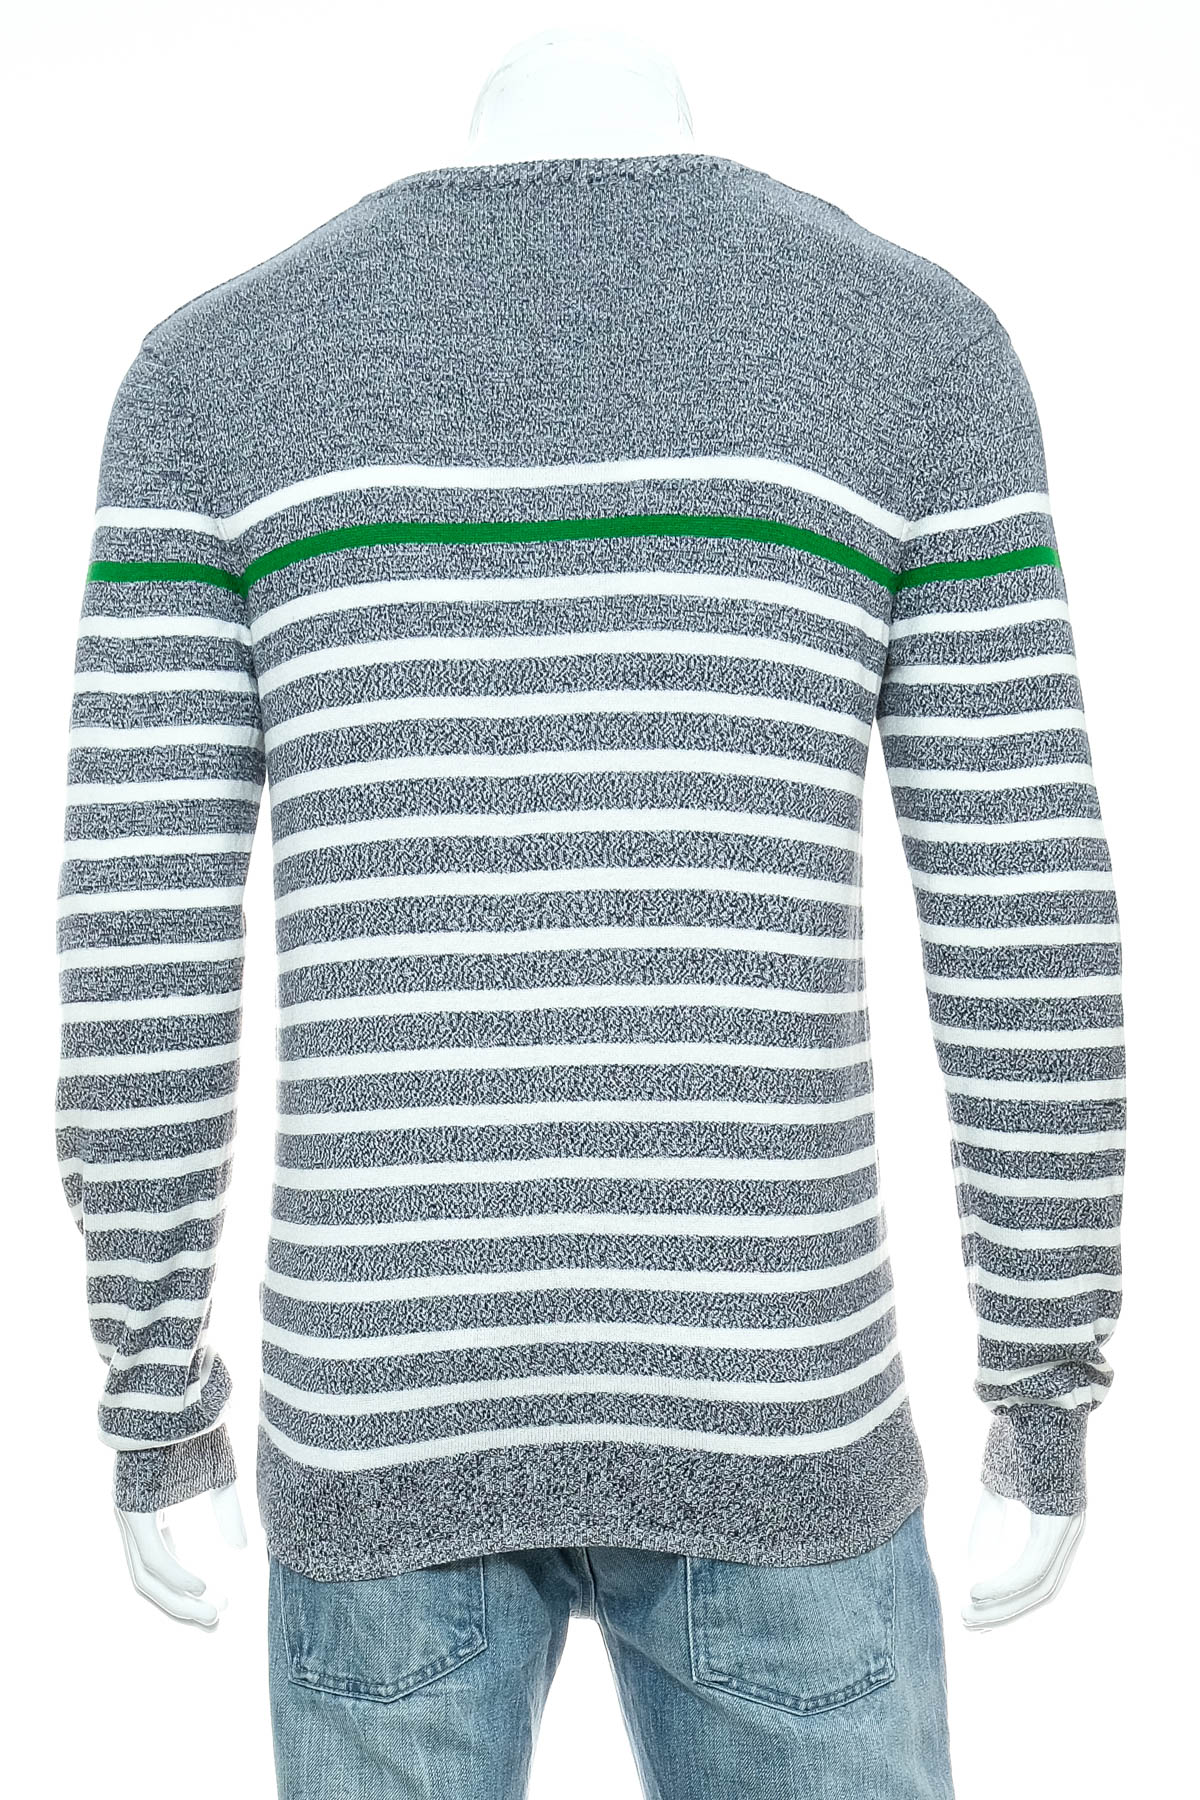 Men's sweater - John Devin - 1